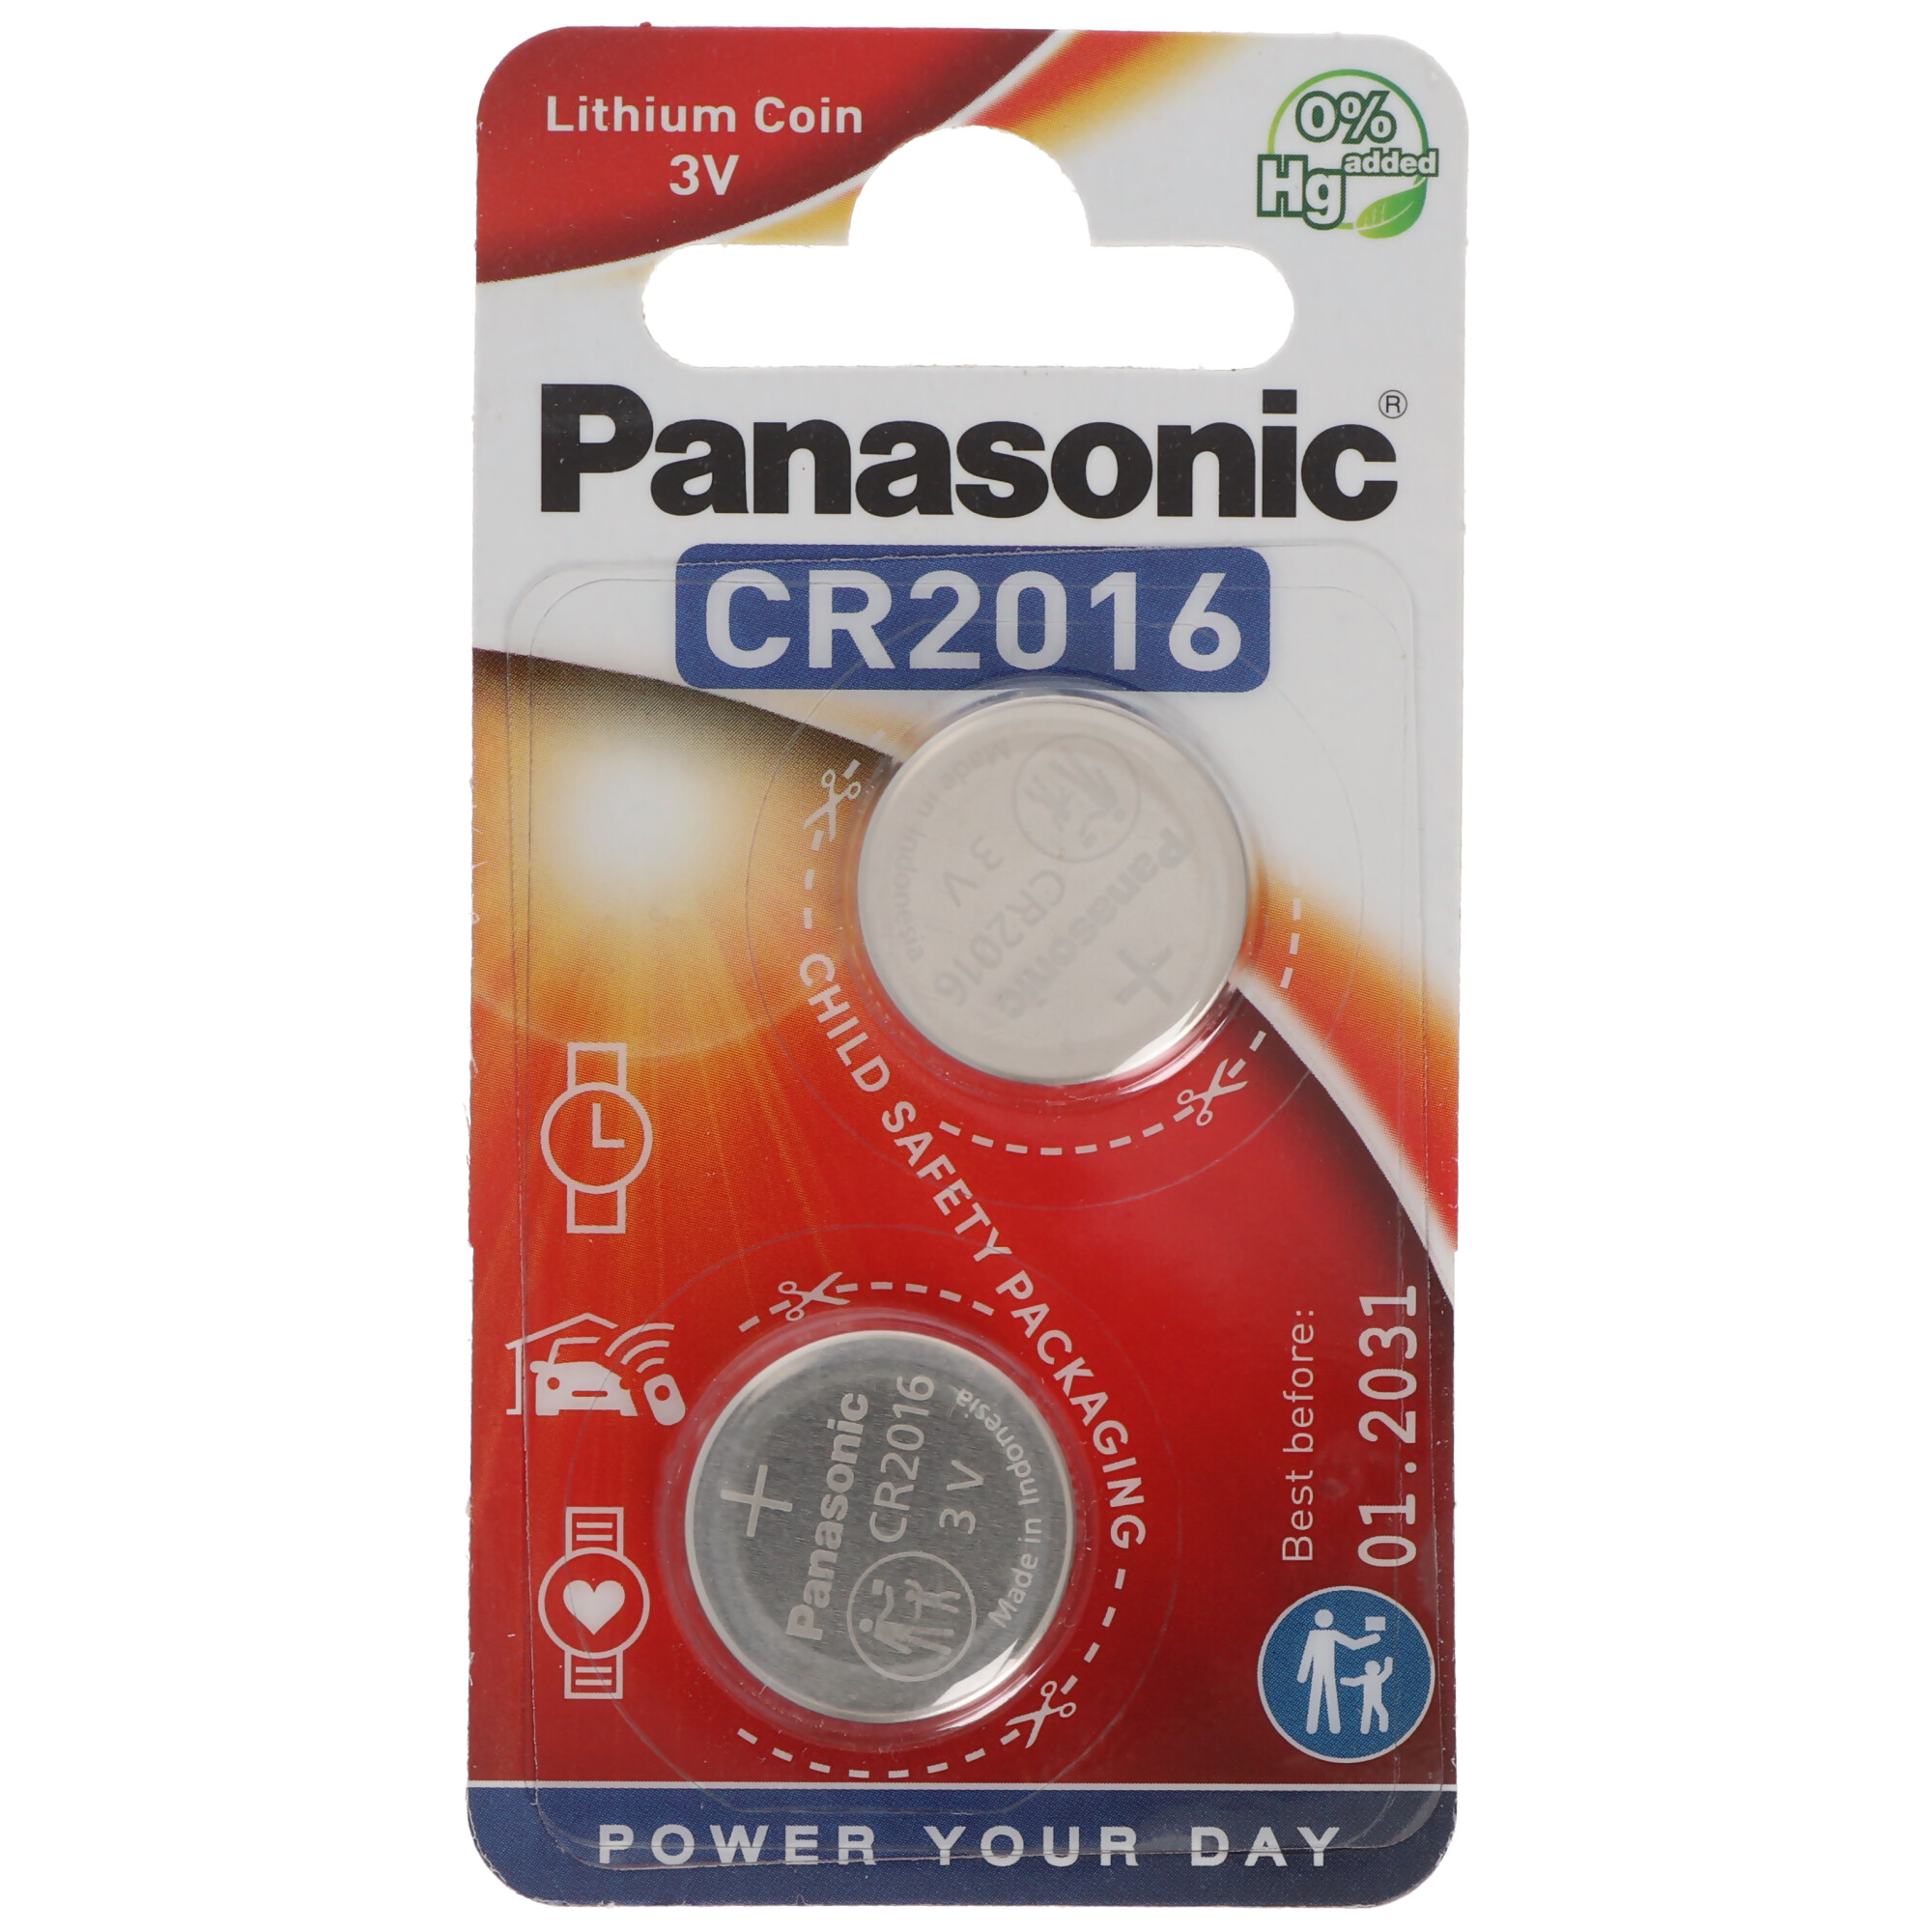 Panasonic Batterie Lithium, Knopfzelle, CR2016, 3V Electronics, Lithium Power, Retail Blister (2-Pack)